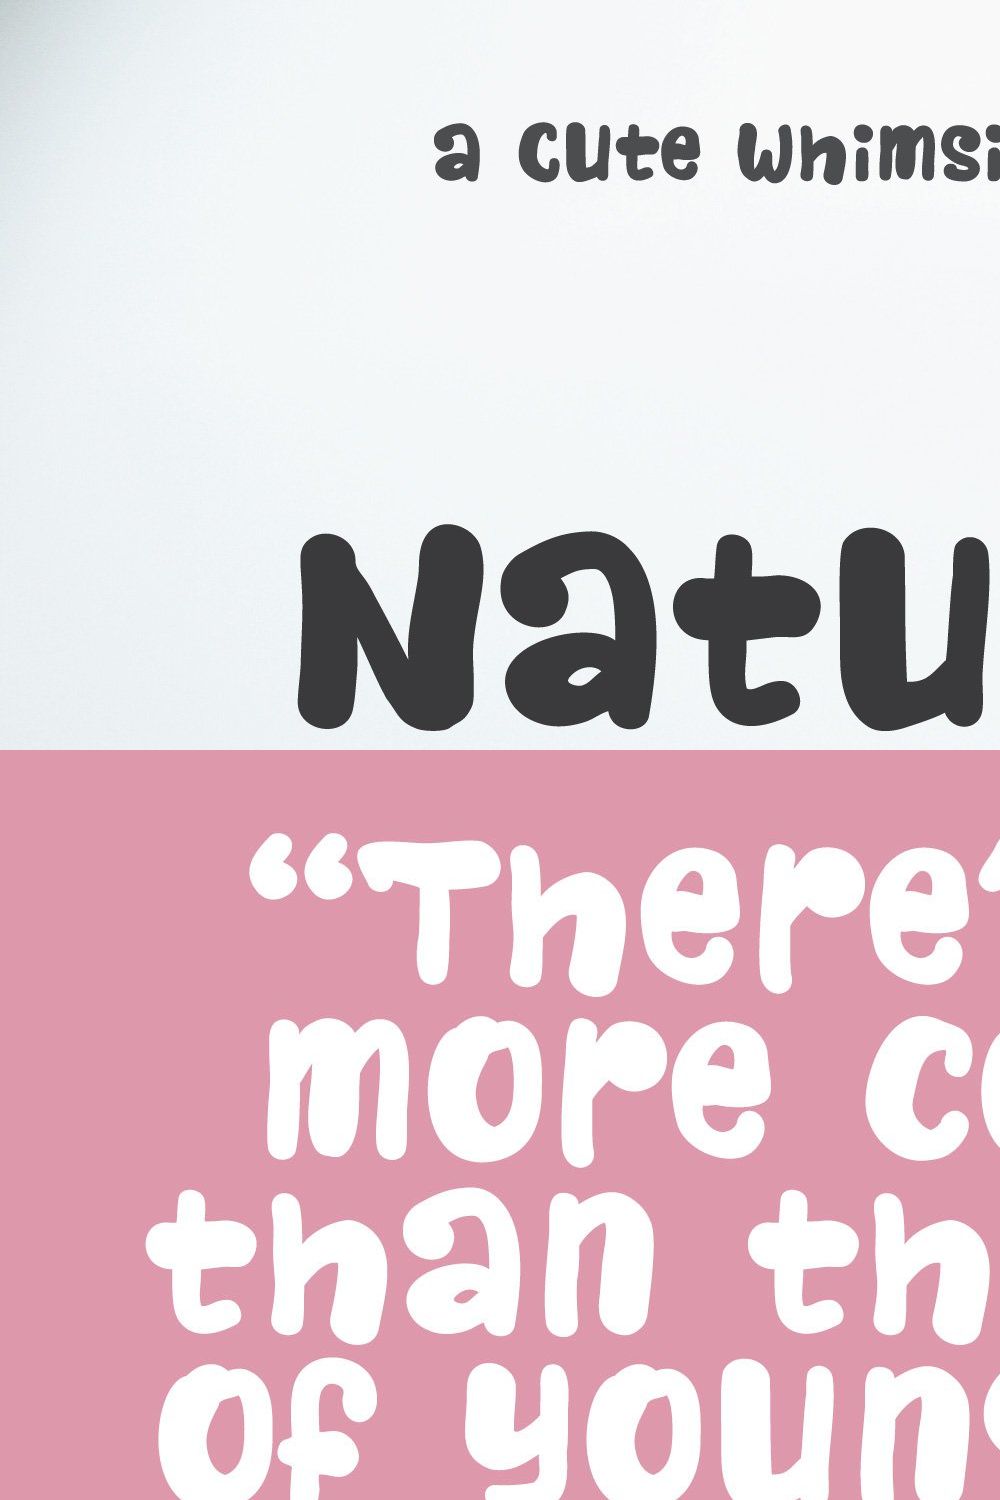 Naturalistic Playground |Handwritten pinterest preview image.